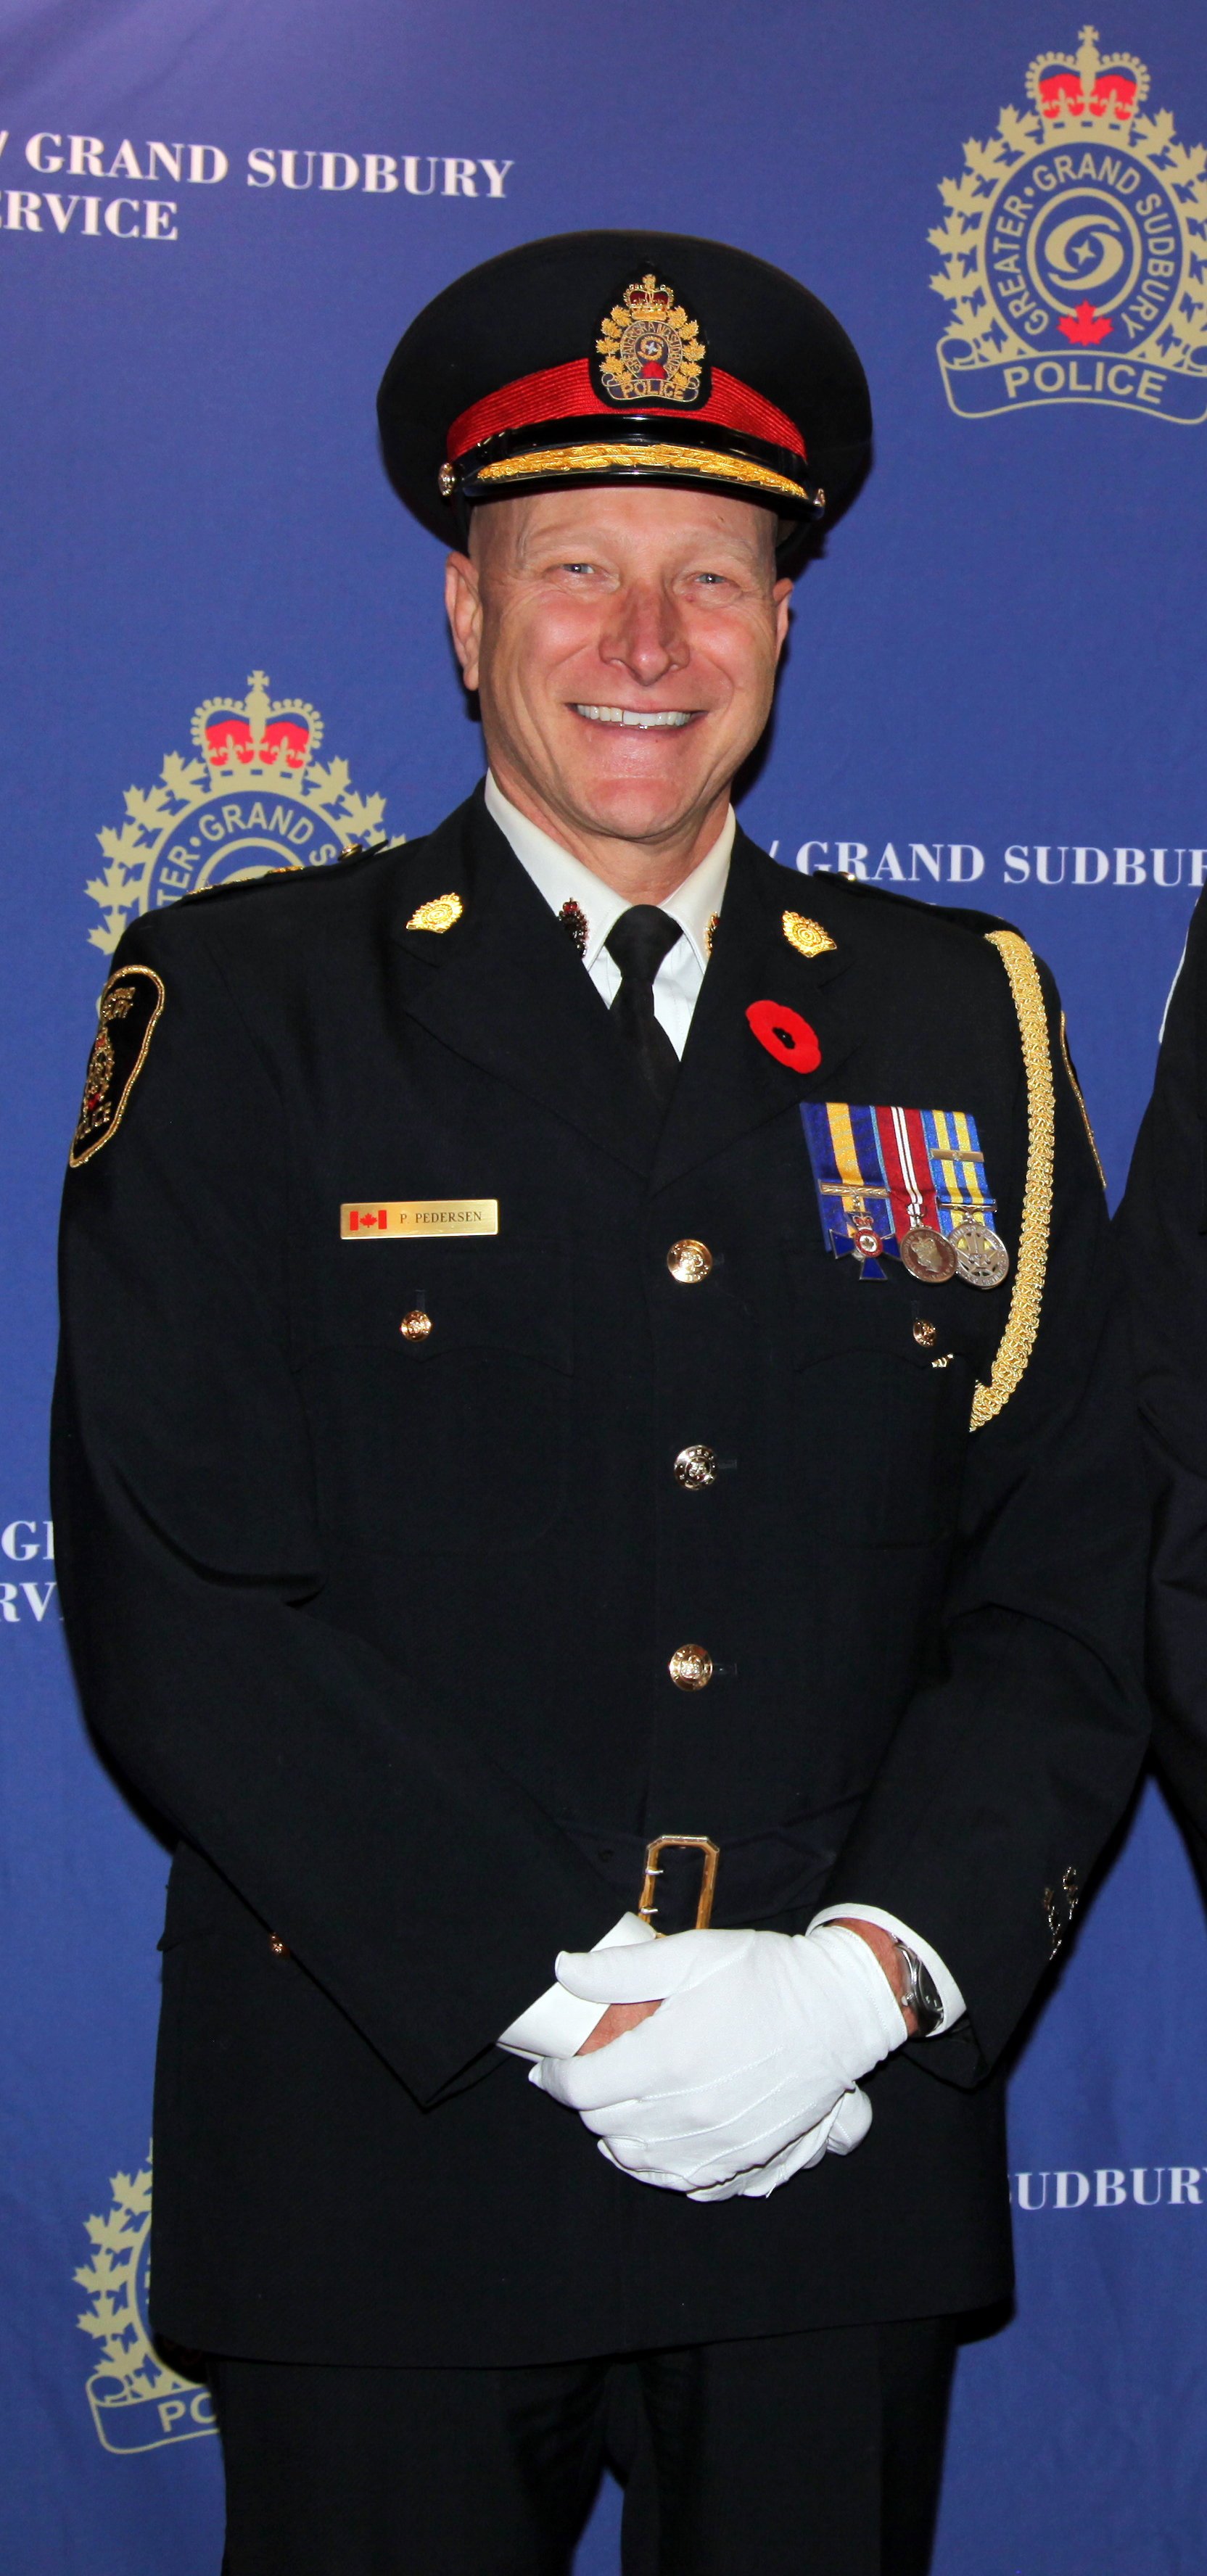 Chief of Police Paul Pedersen